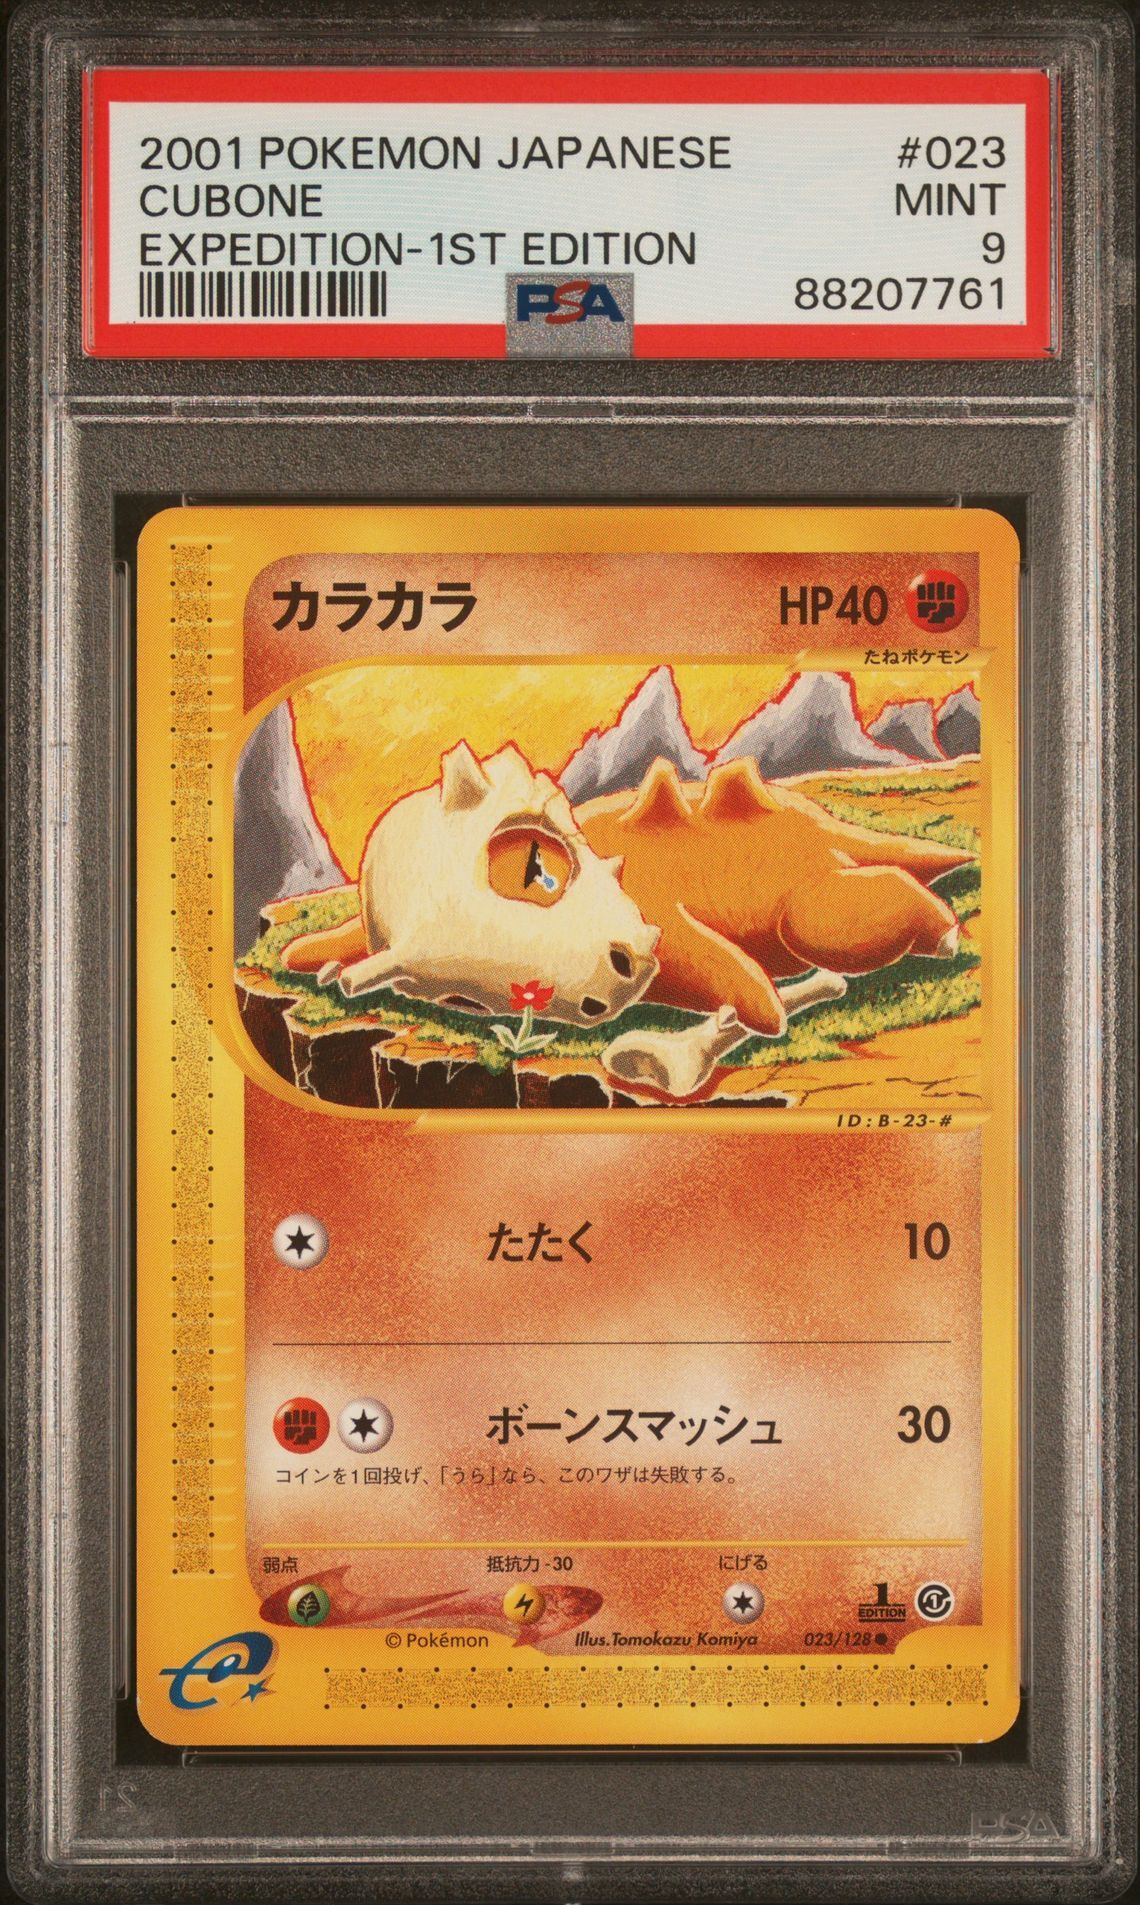 2001 POKEMON JAPANESE EXPEDITION 023 CUBONE 1ST EDITION - PSA 9 MINT - Pokémon